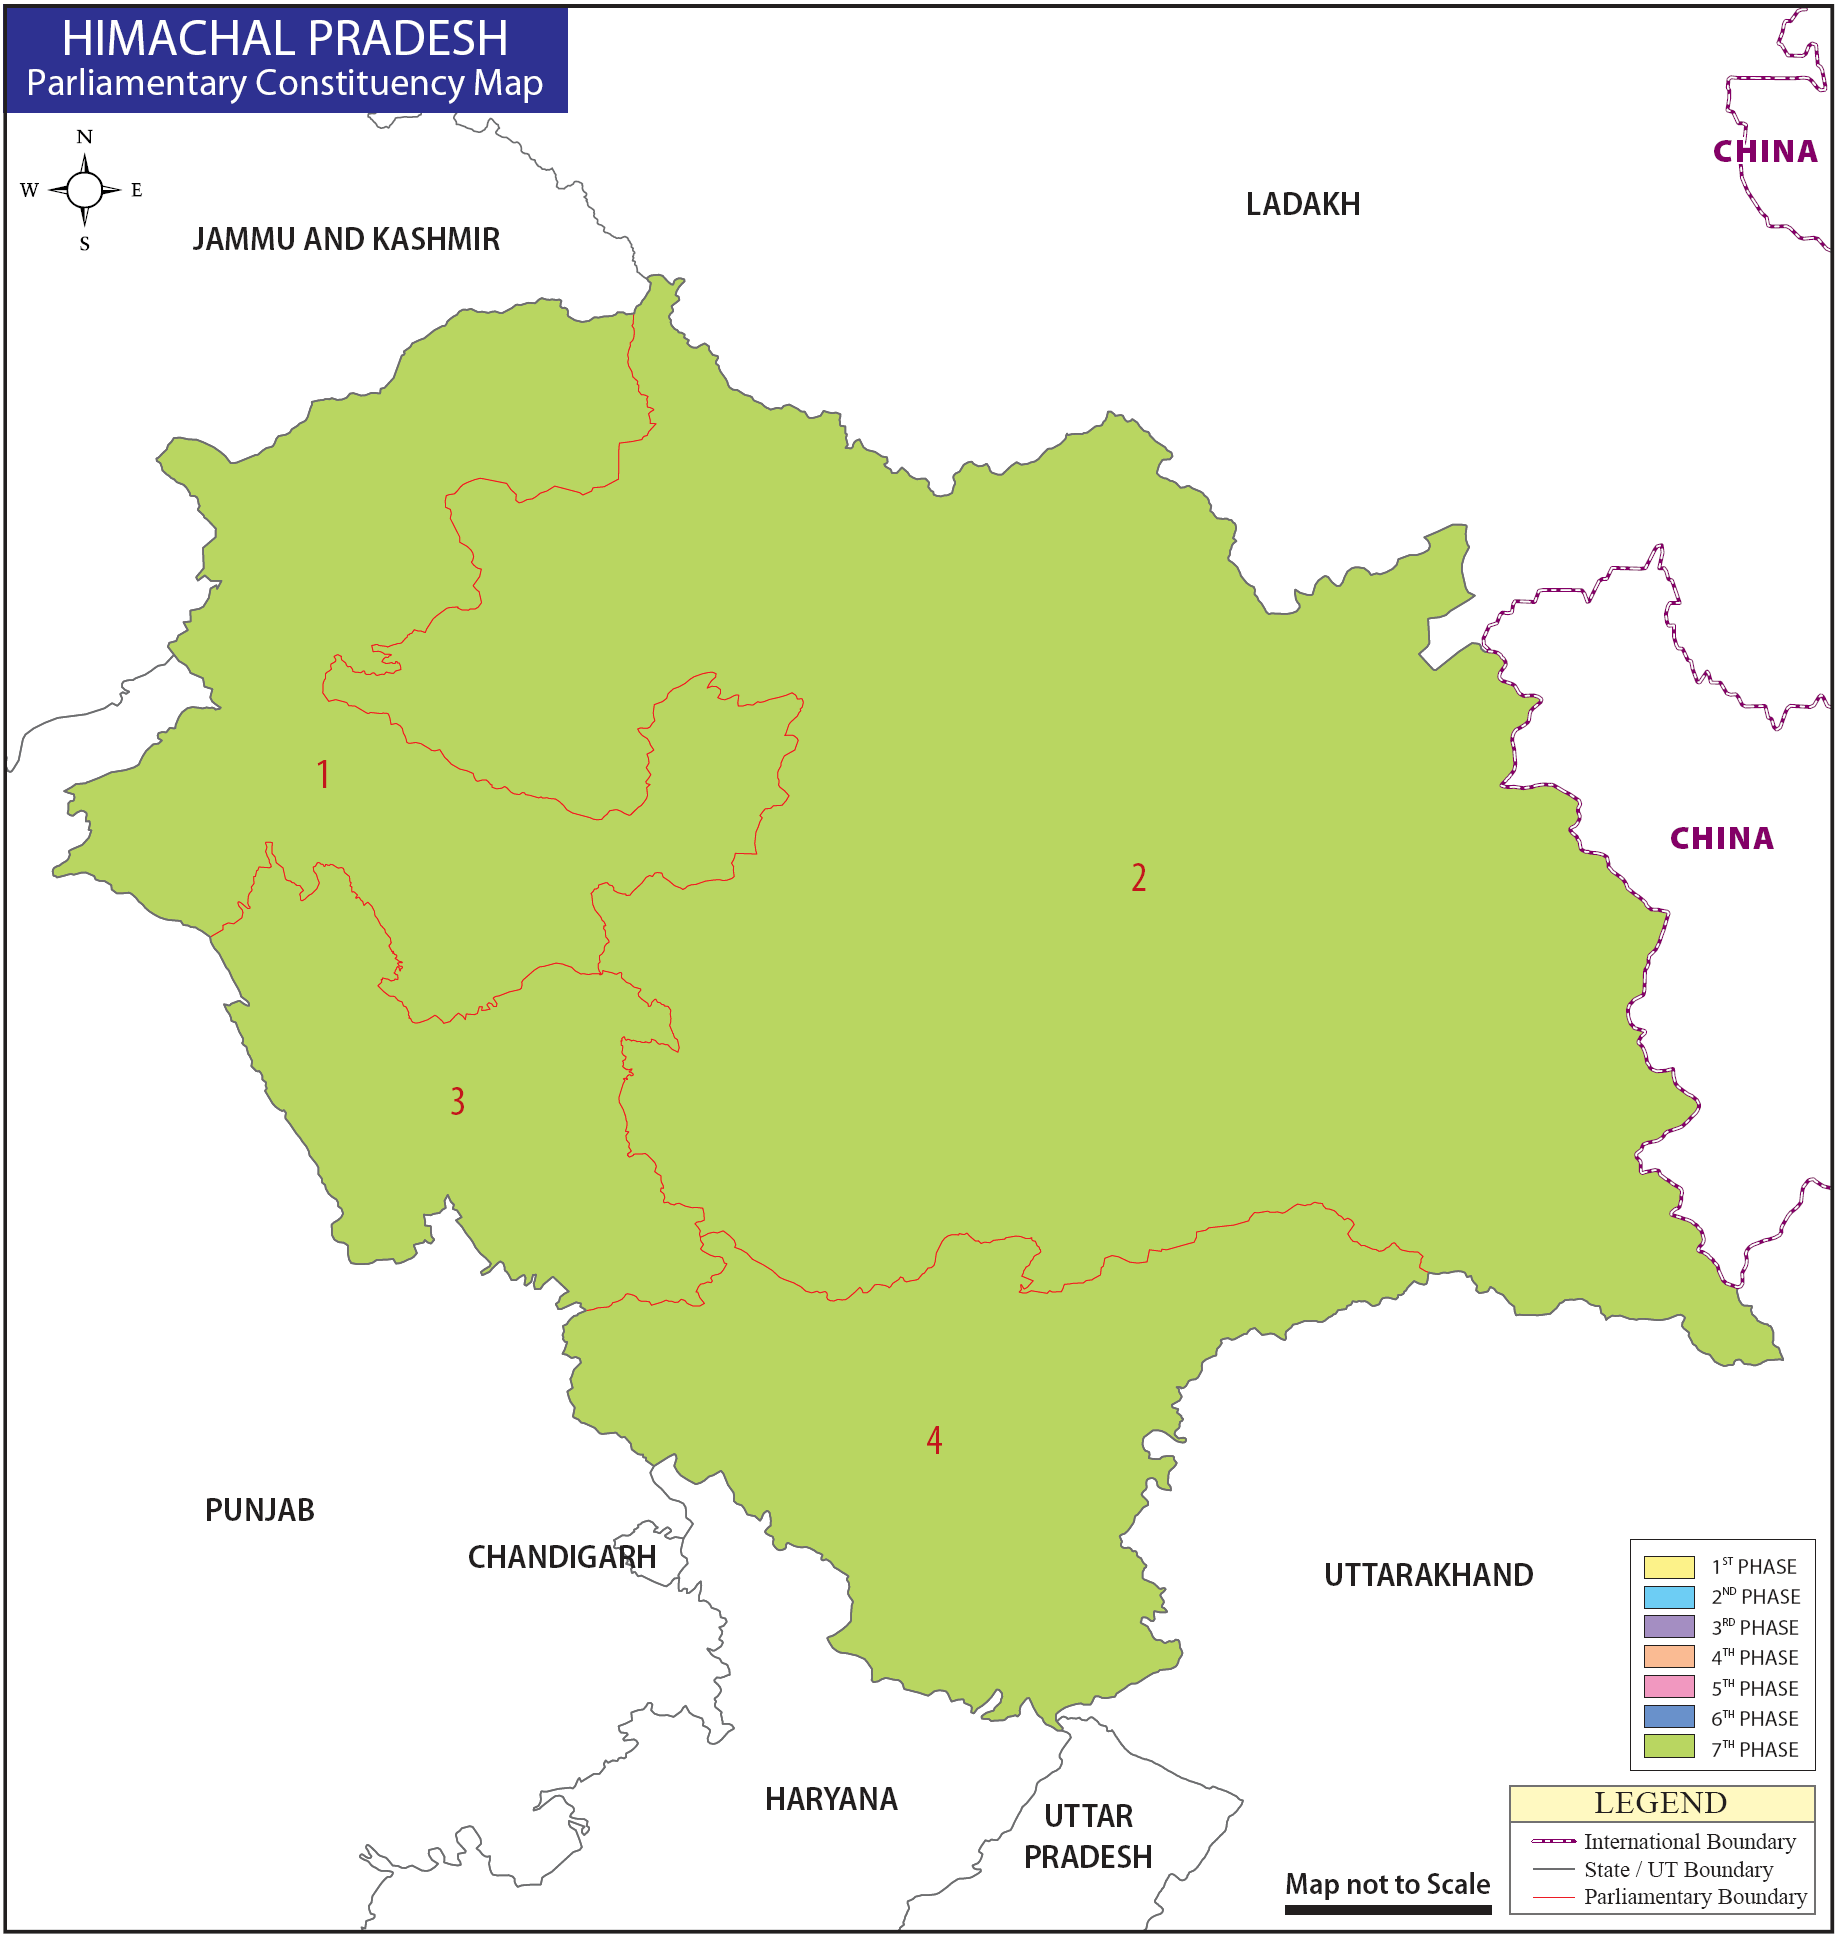 Himachal Pradesh Parliamentary Constituency Map